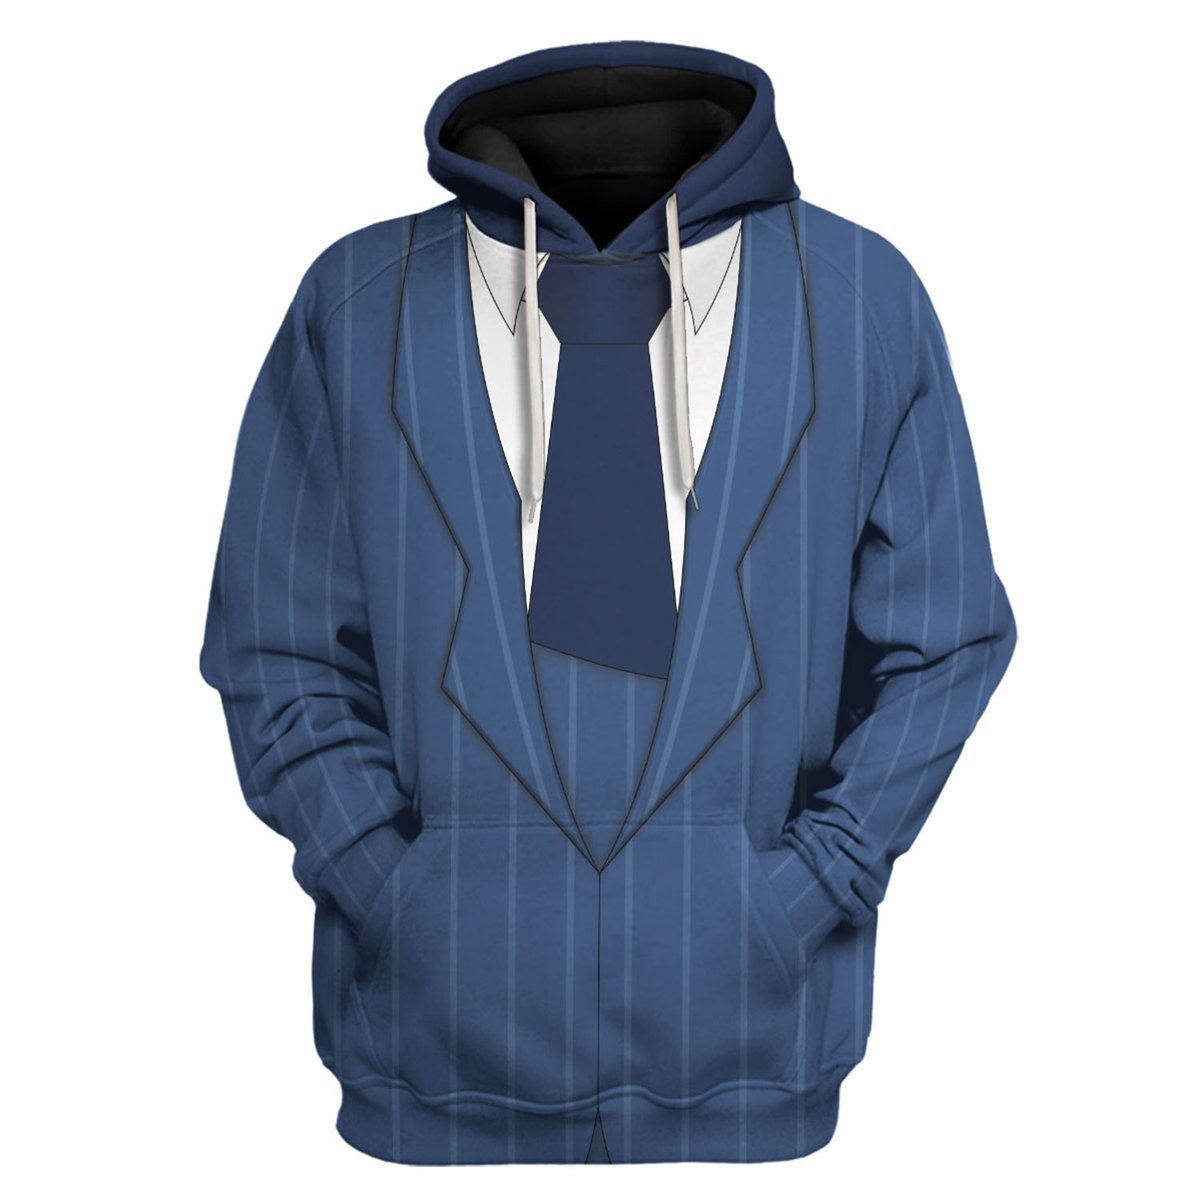 Spy Blue Team TF2 hoodie